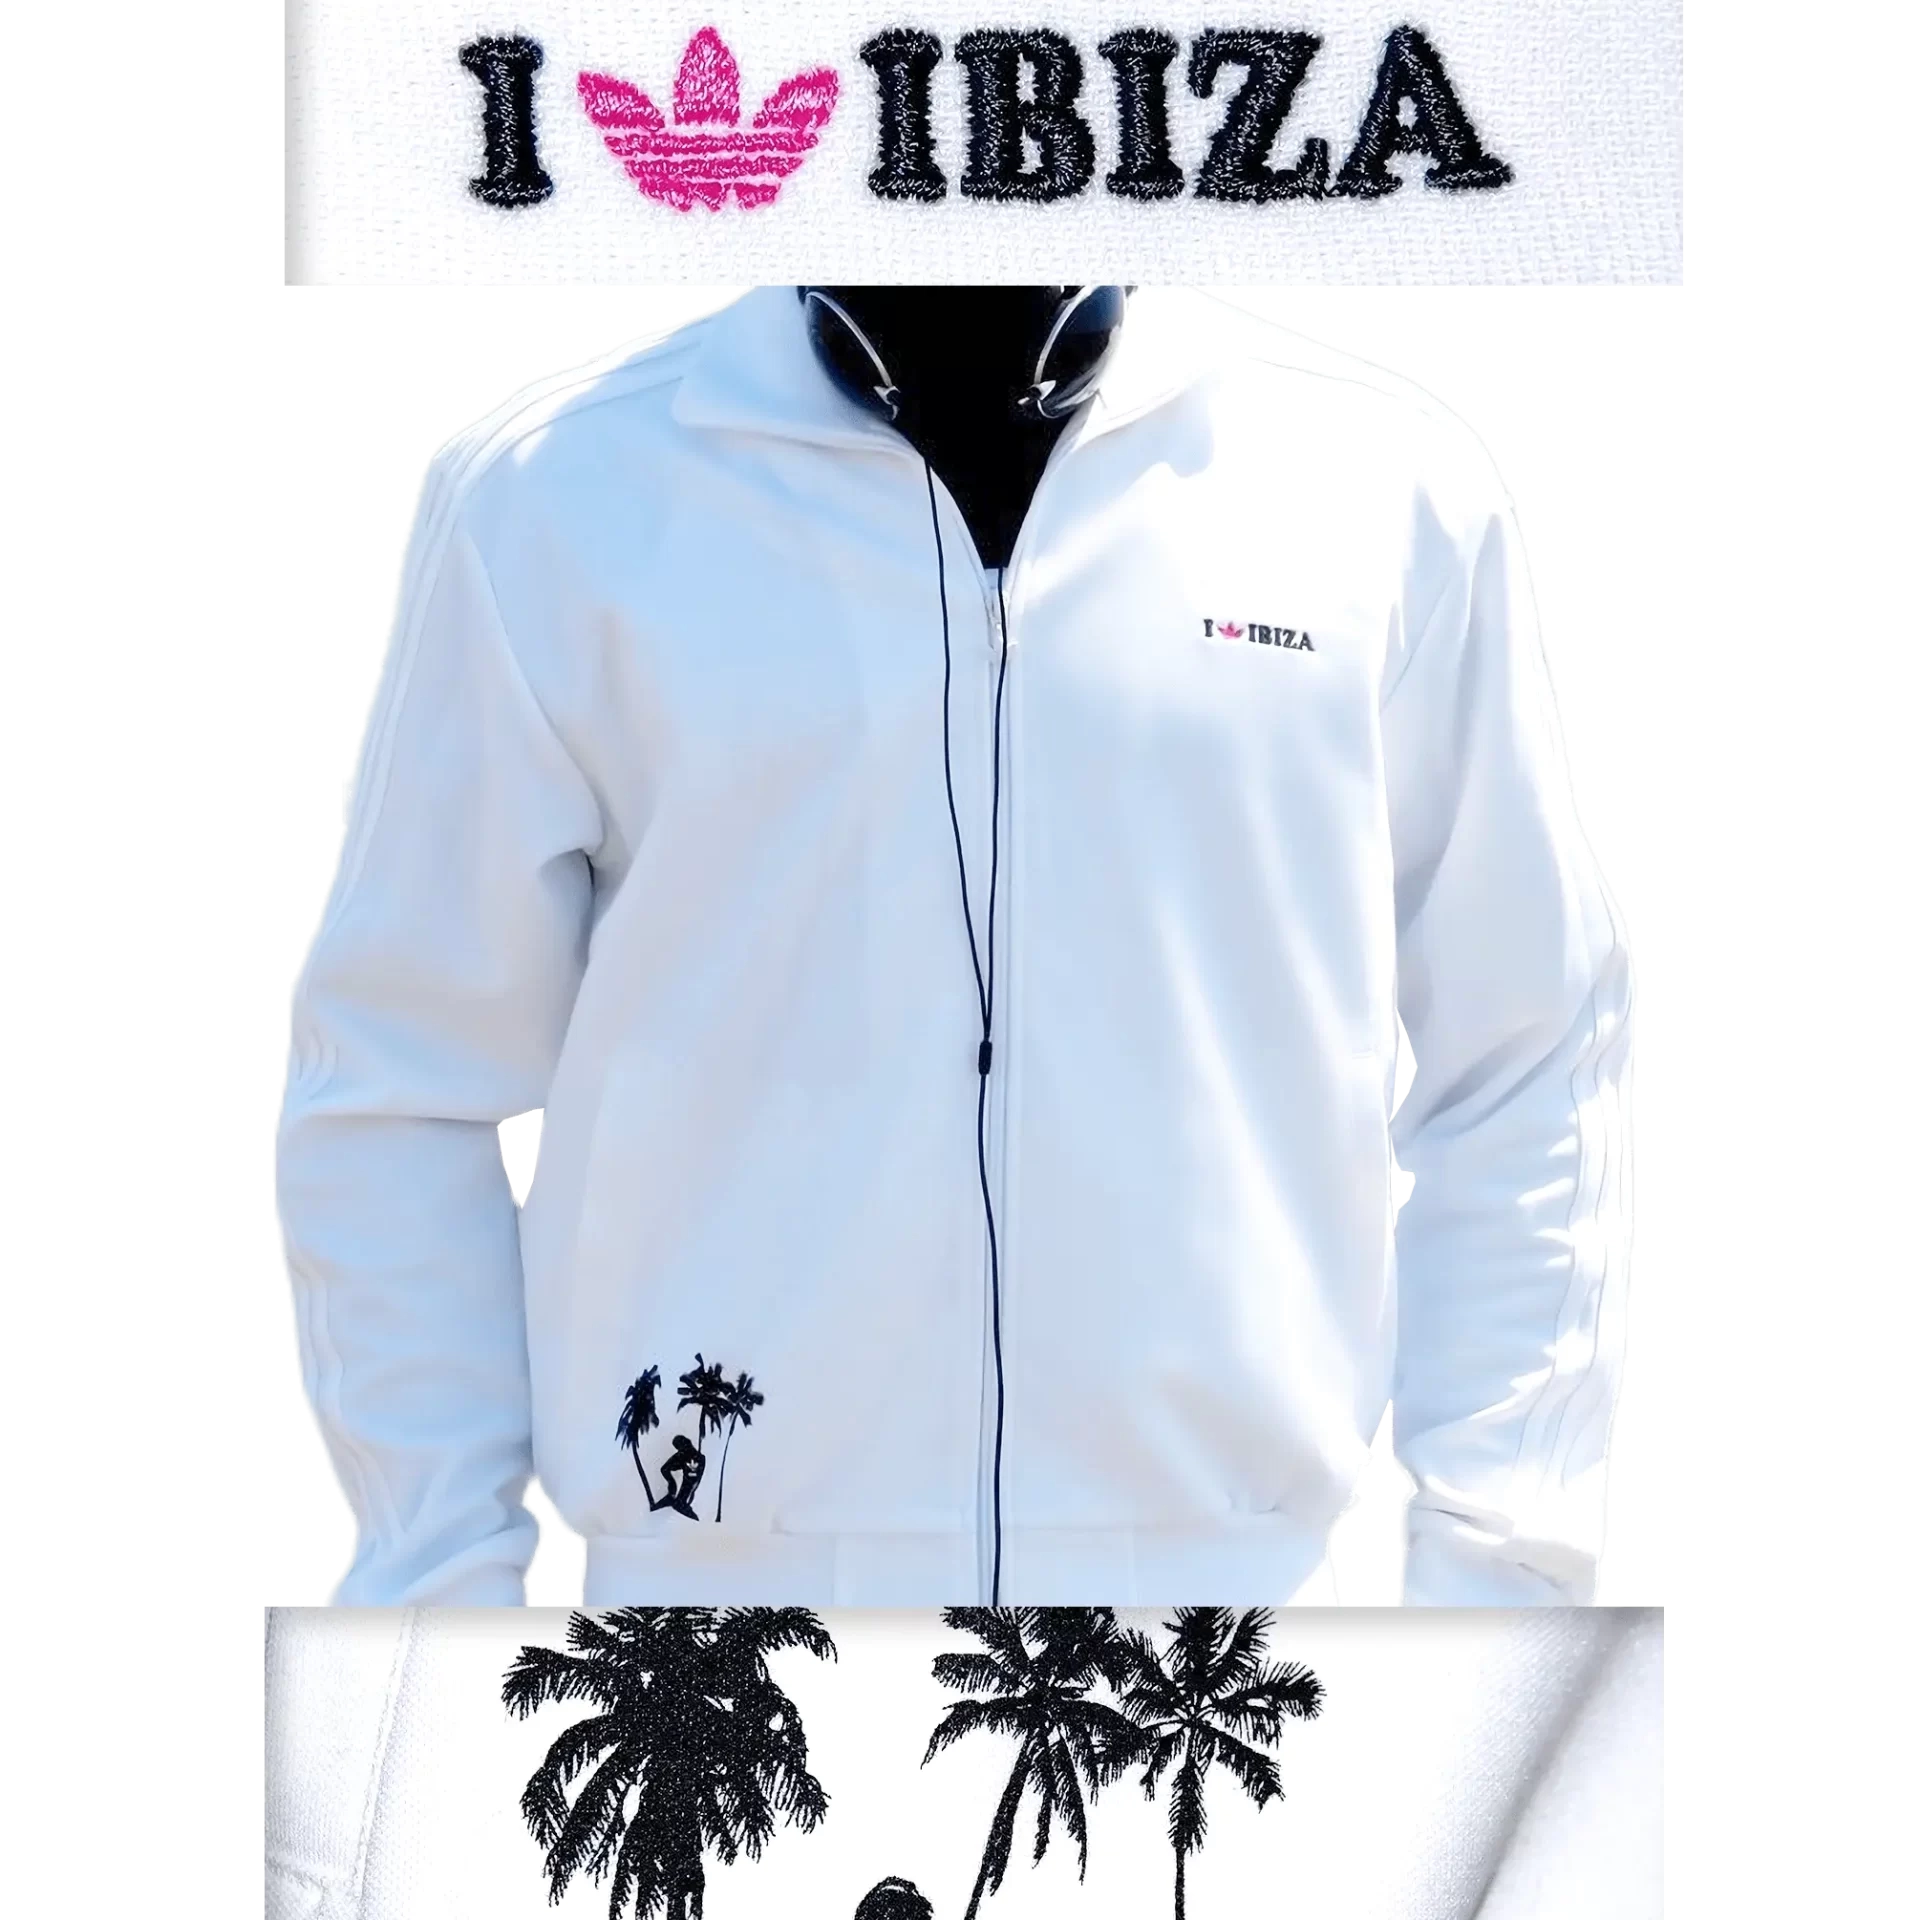 Men's 2007 Ibiza Track Top by Adidas Originals: Humility (EnLawded.com file #lmchk59417ip2y123325kg9st)